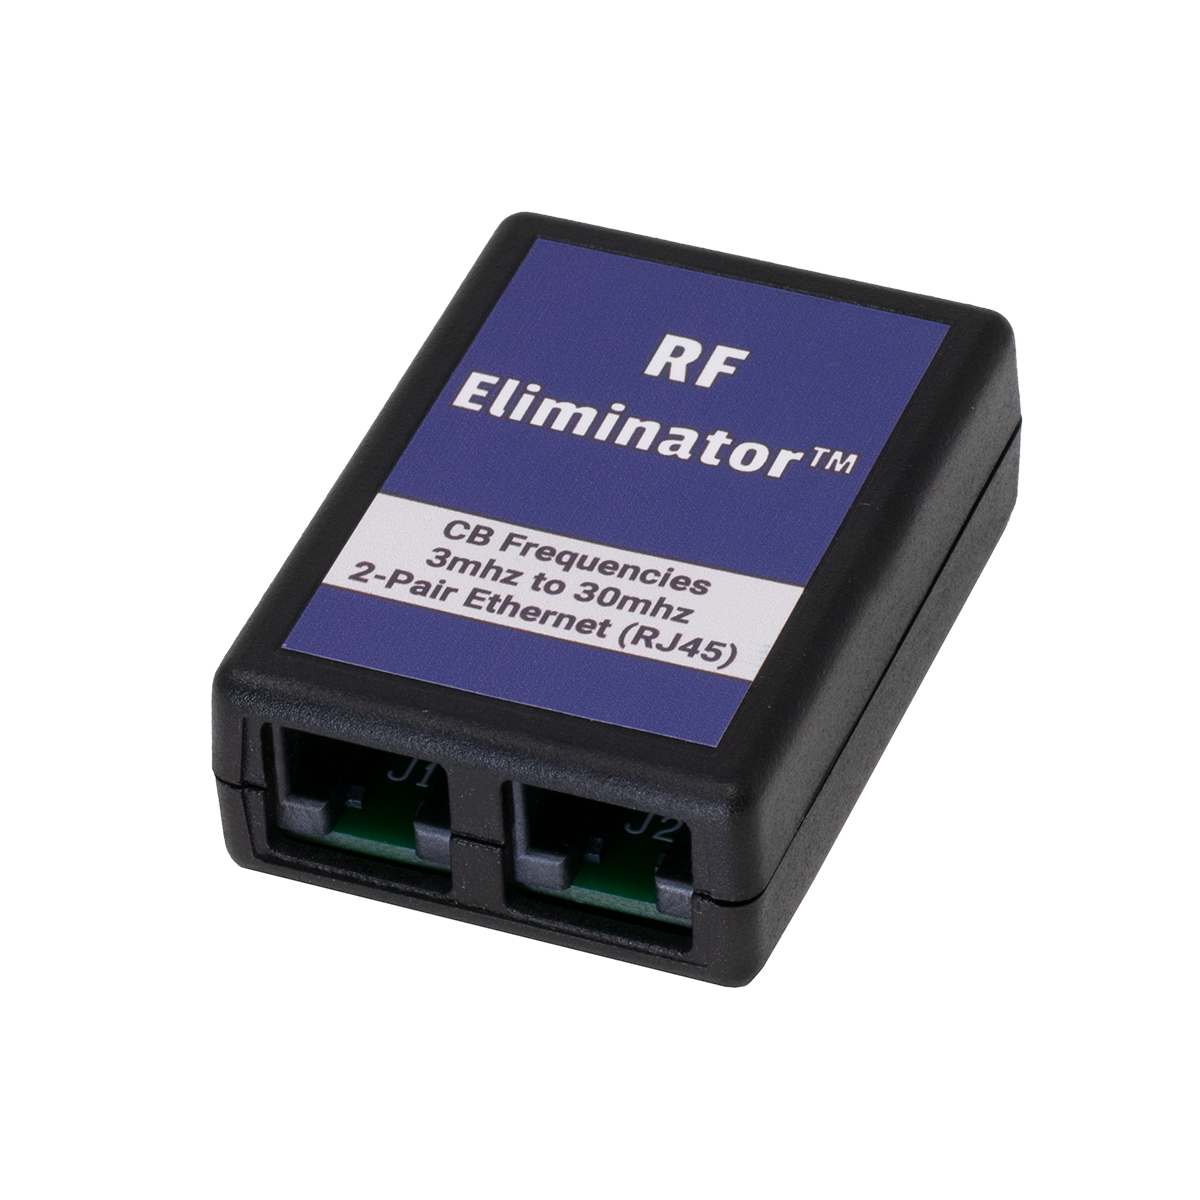 RF Eliminator - 2 Pair Ethernet - CB (Side View)